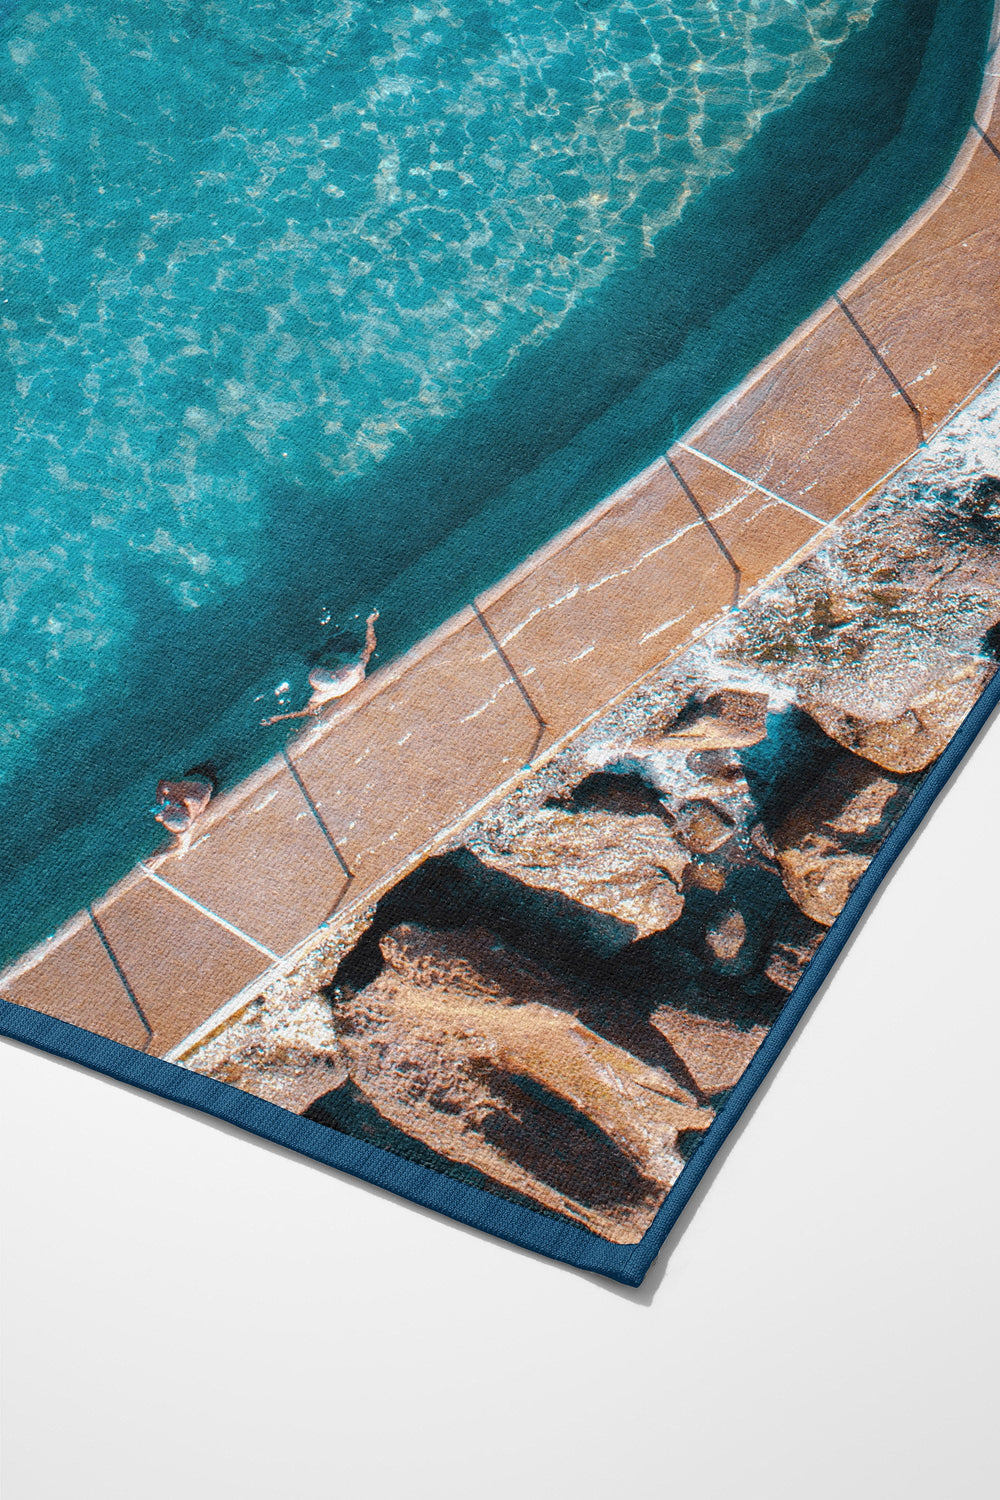 Bronte Double Sided Beach Towel - Australia Unseen